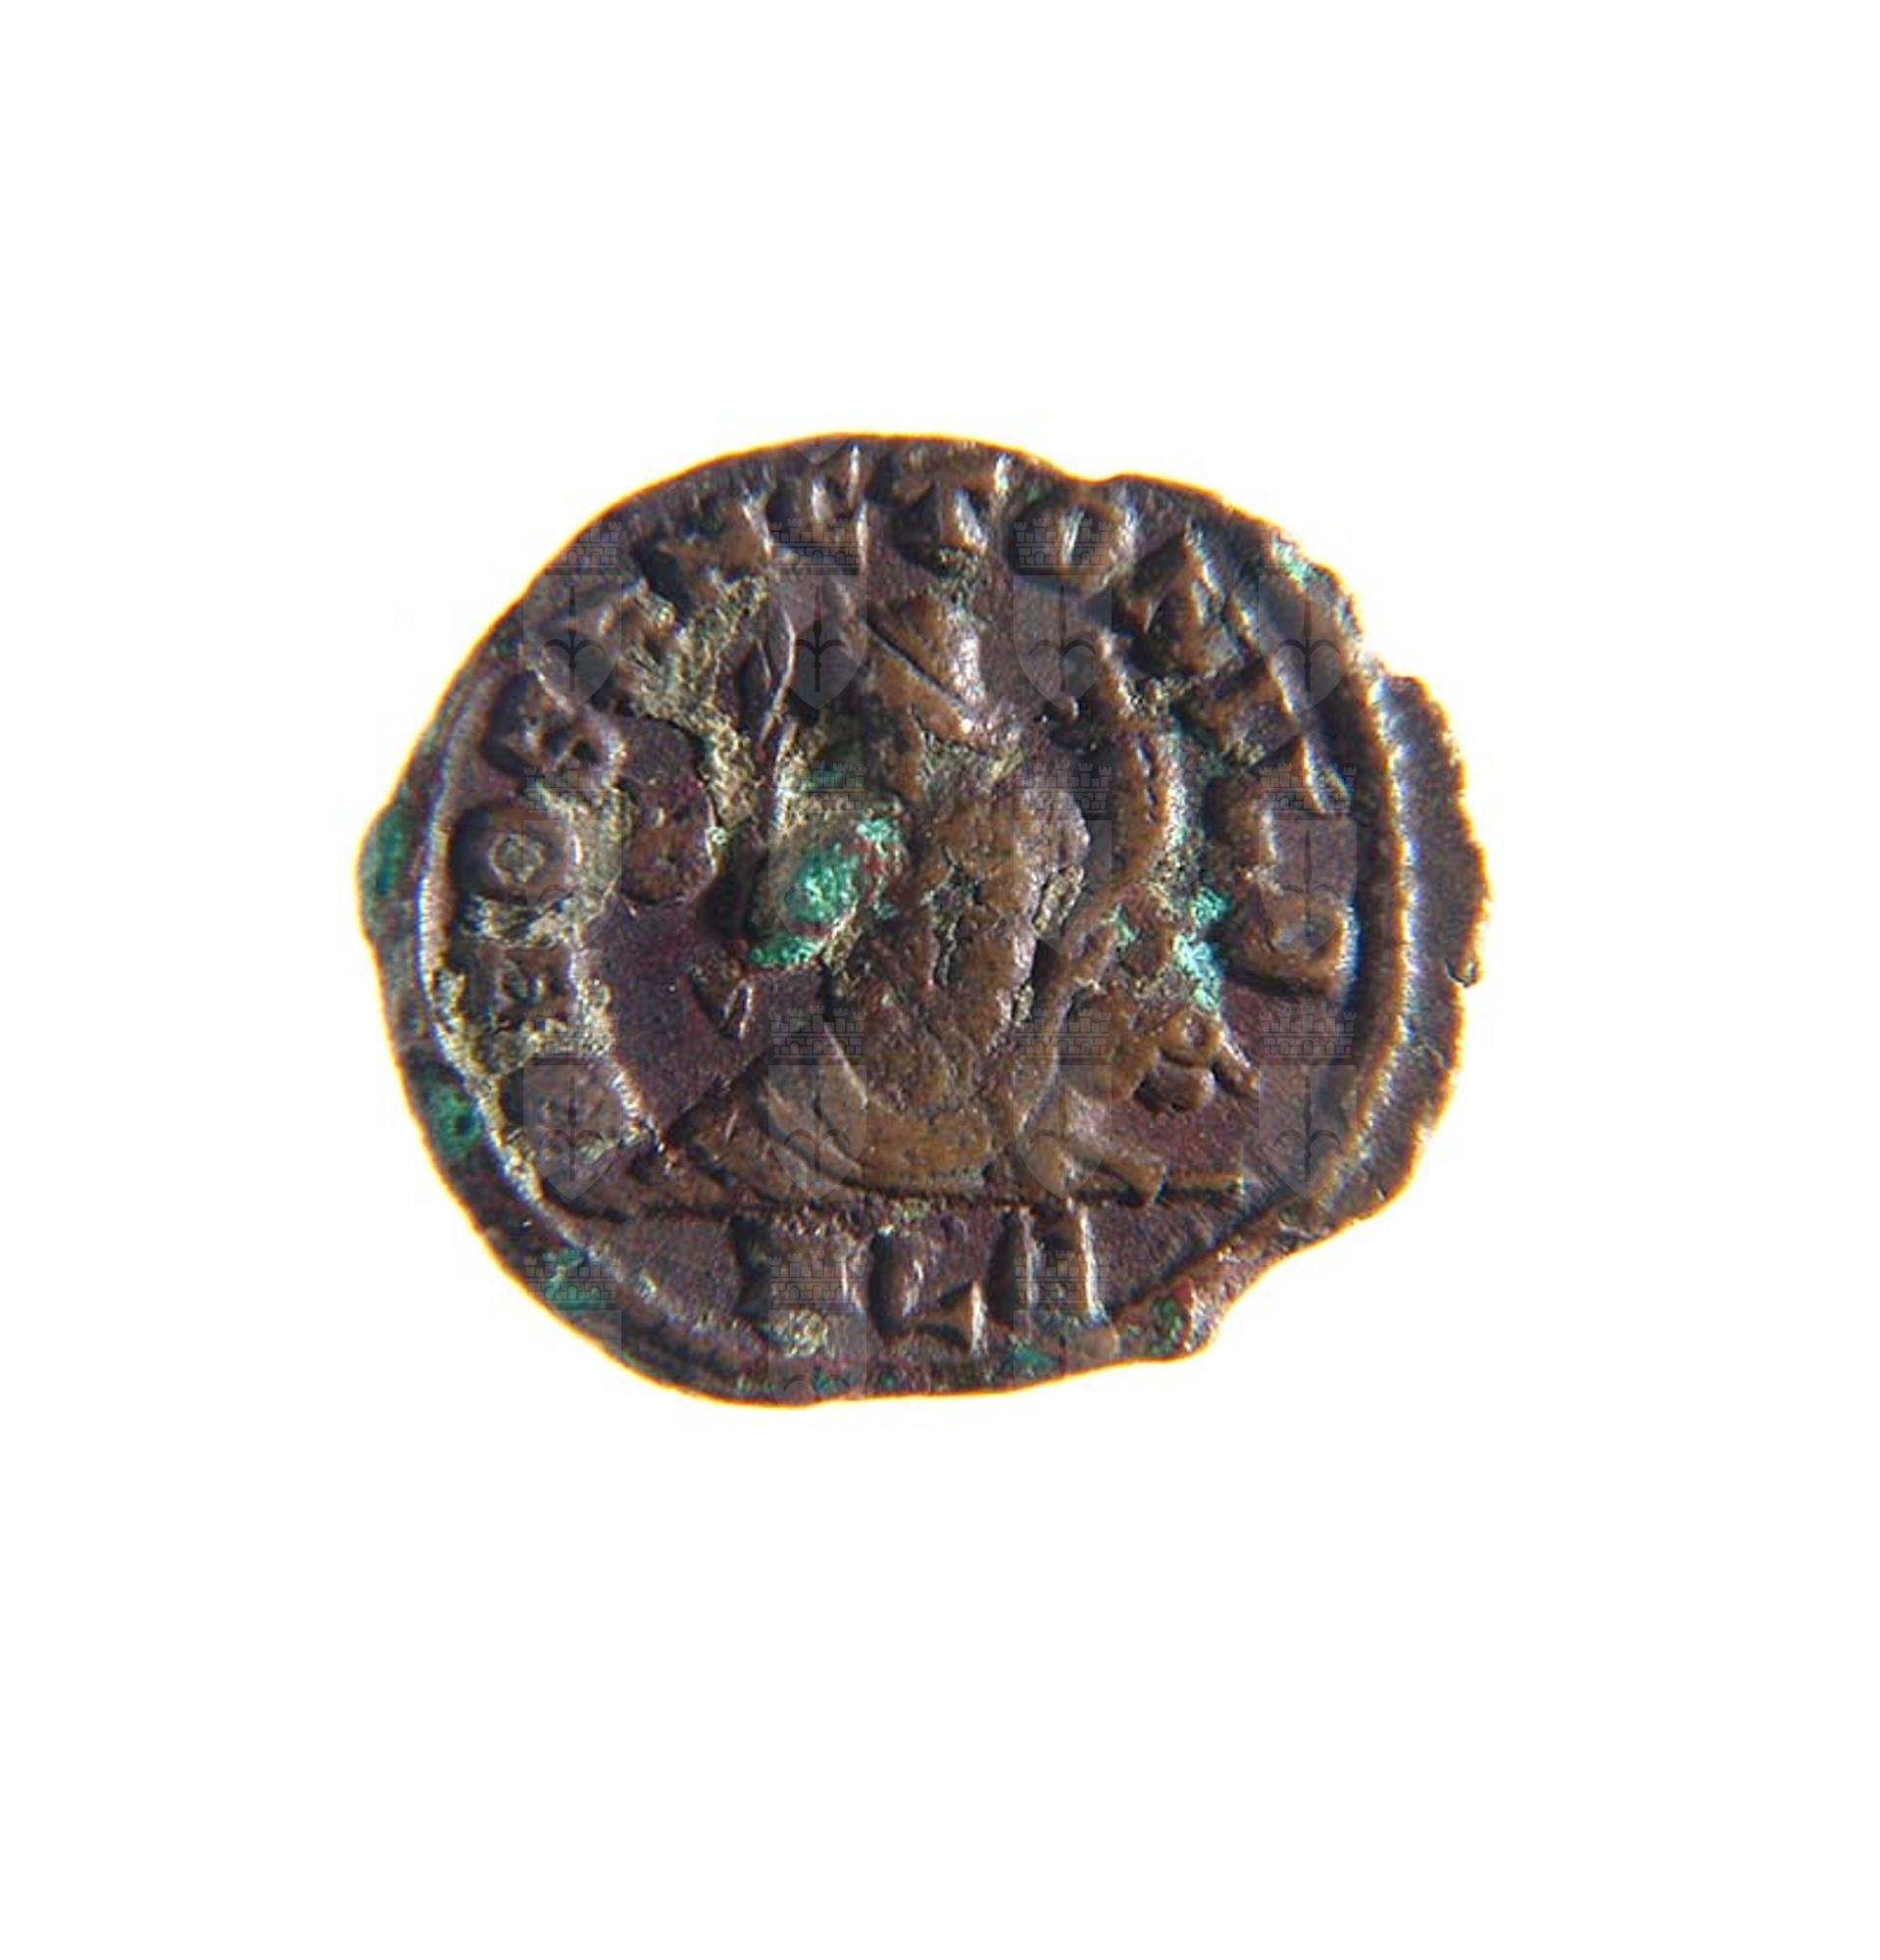 https://catalogomusei.comune.trieste.it/samira/resource/image/numismatica/CMSA_MAW_NU/CMSARA000000_Roma2866_b.JPG?token=65e6c9e1b317c